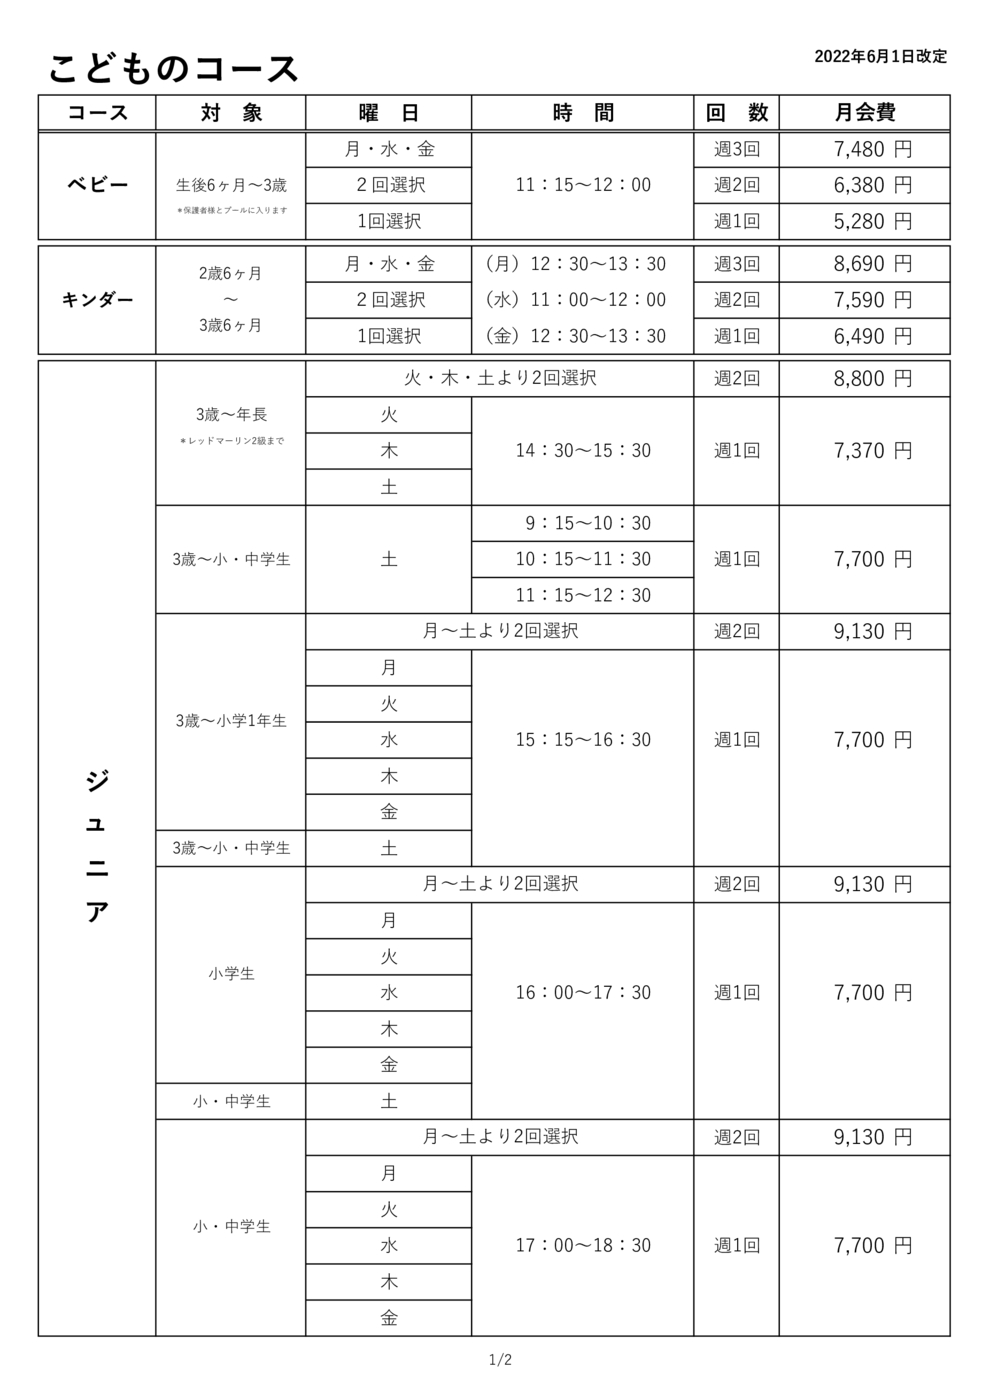 【HP】22.6月こどものコース・料金表